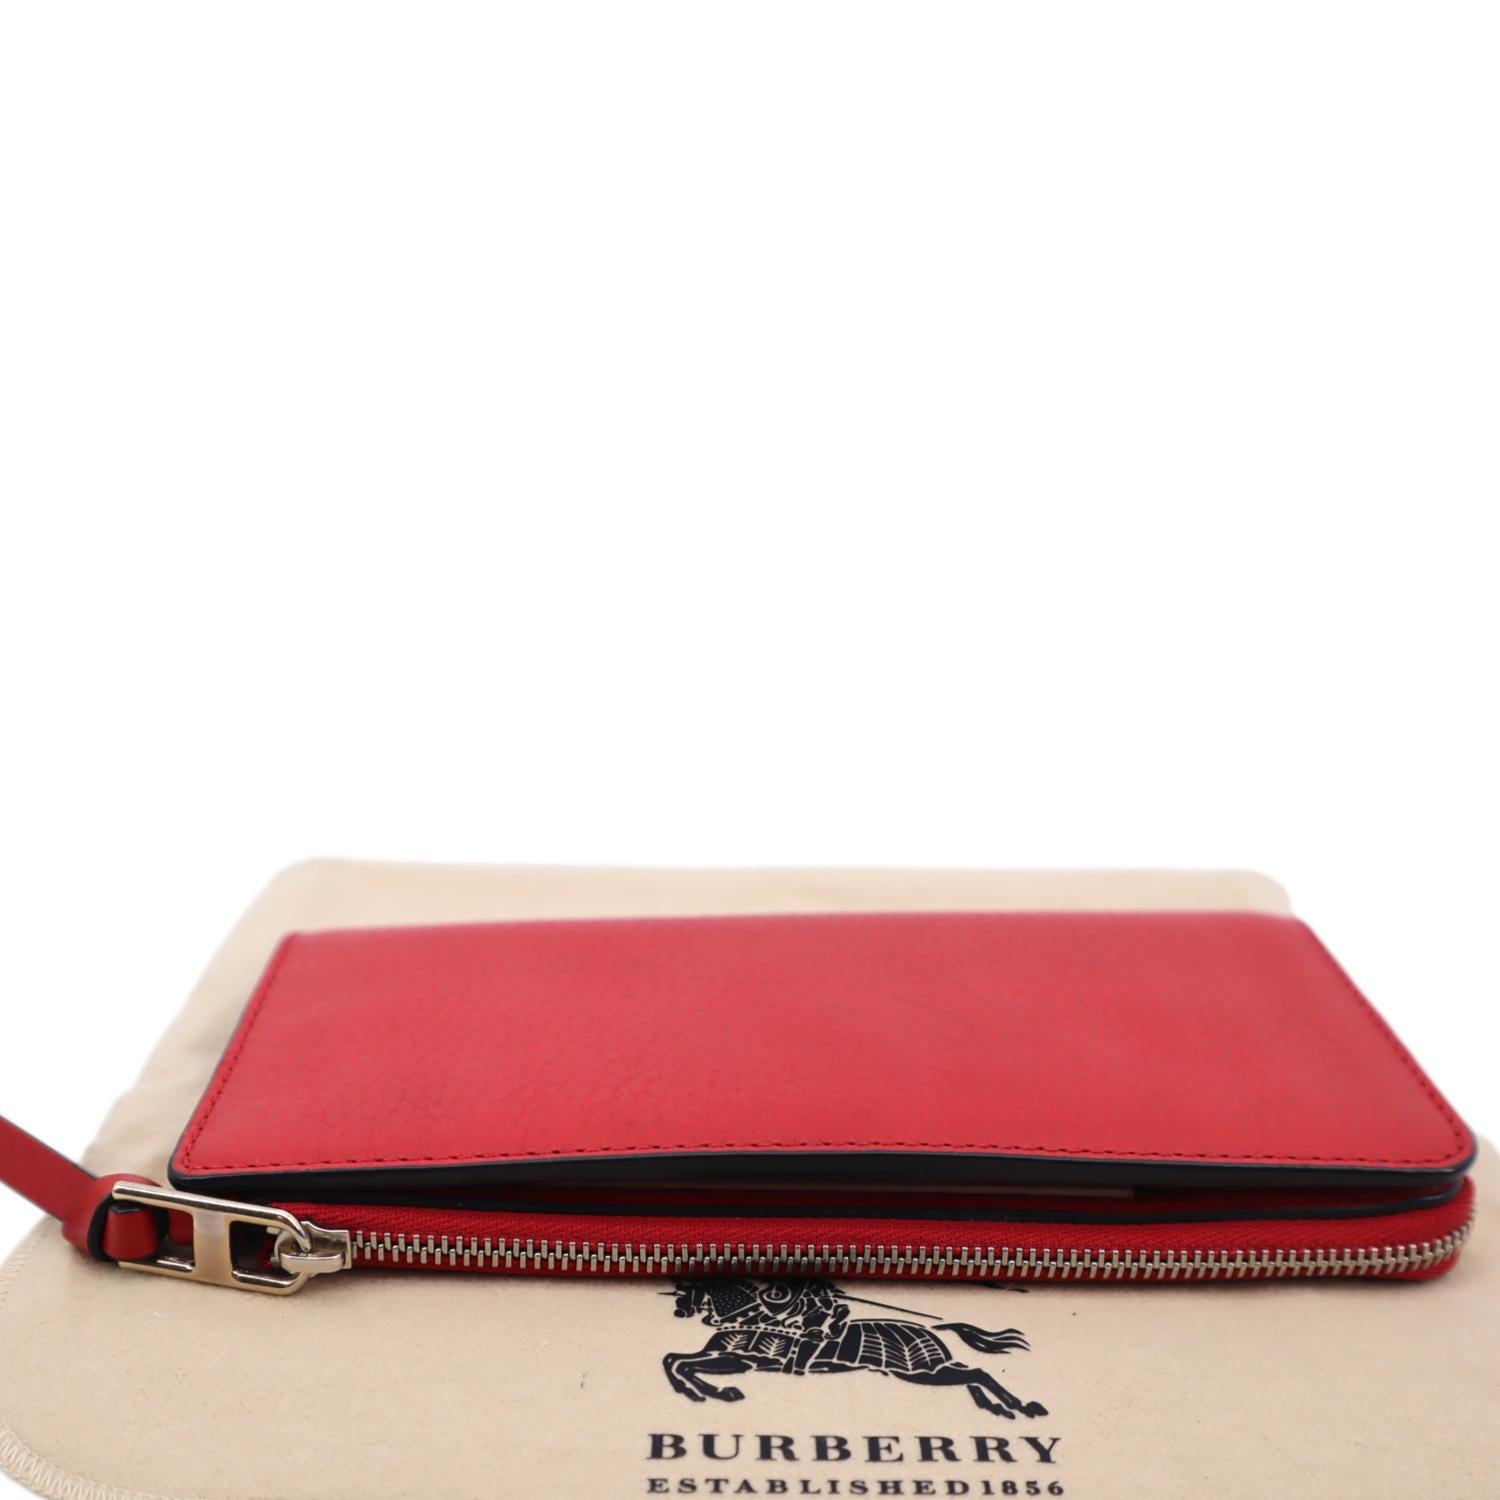 Burberry Handbag Plaid With Wallet and Original Box and Dust Bag